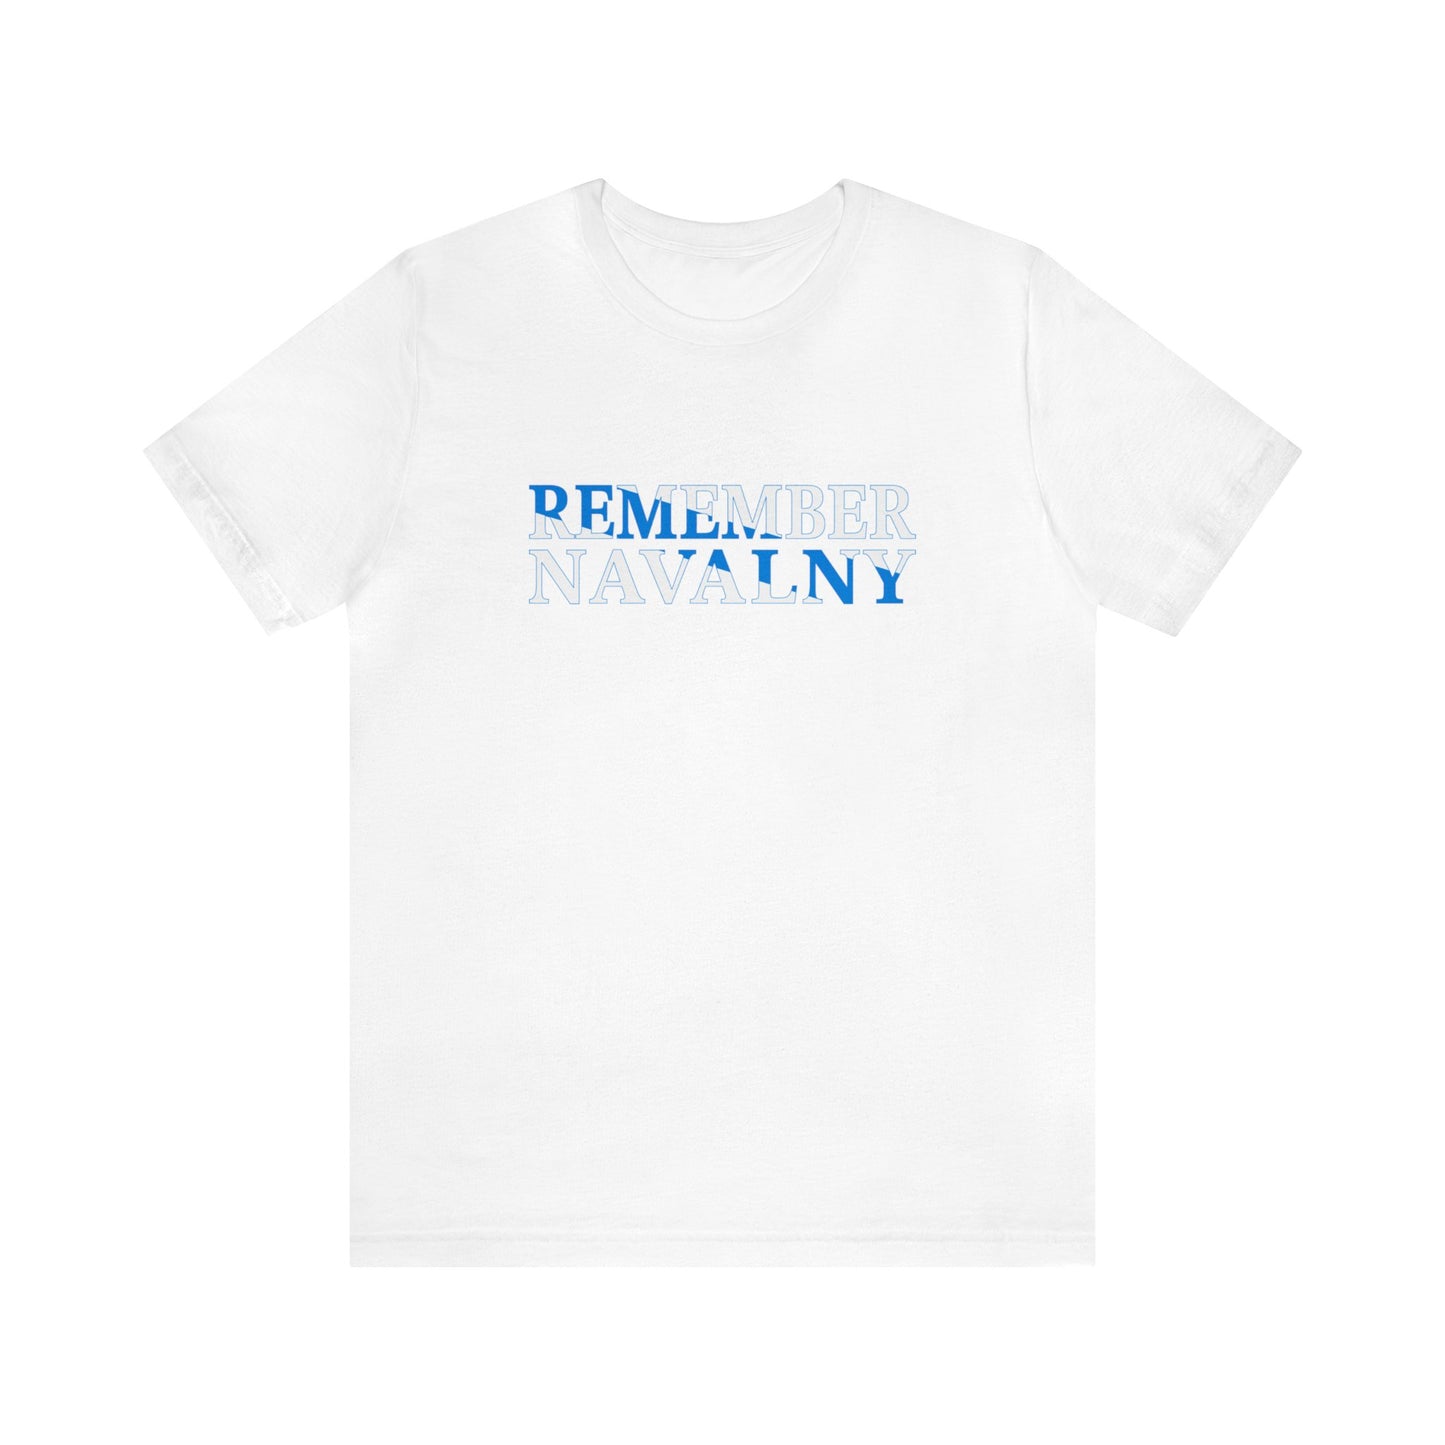 Remember Navalny - Unisex T-Shirt